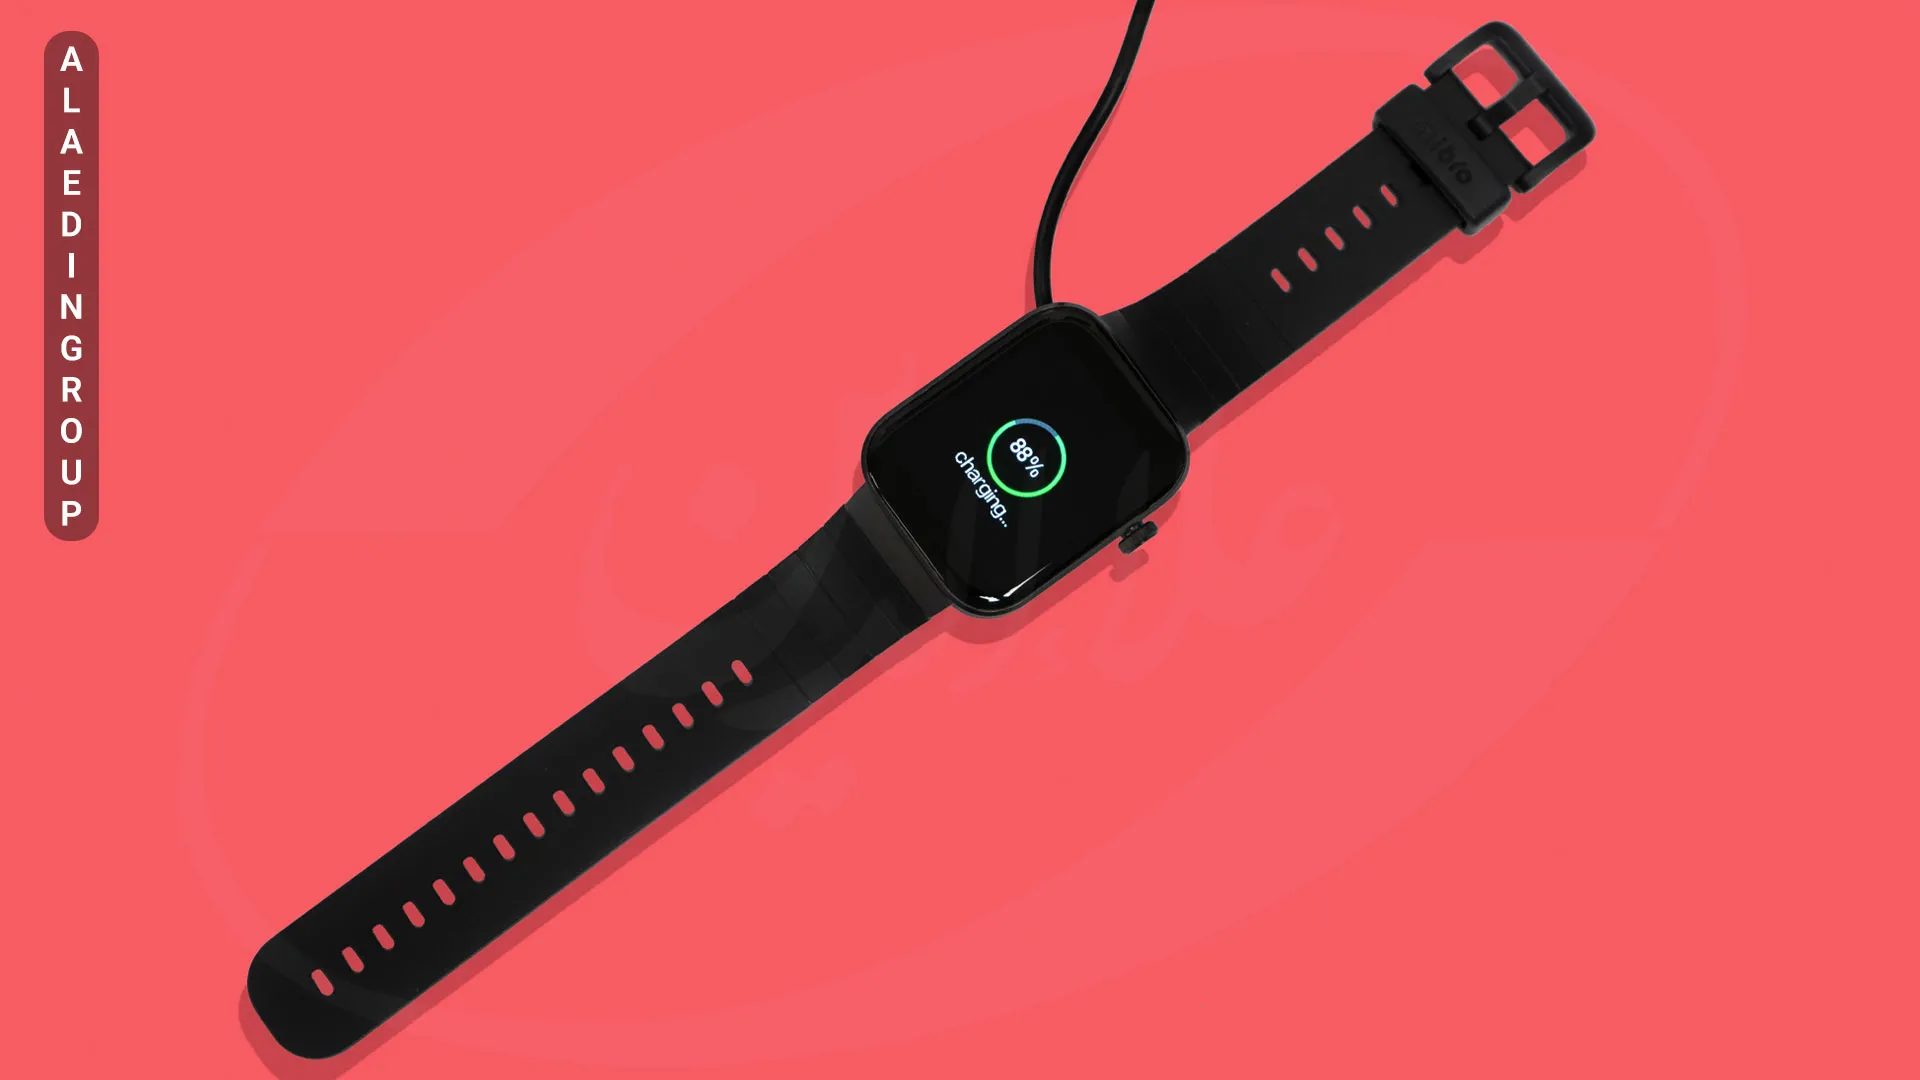 شیائومی میبرو Watch T1 در شارژ
Xiaomi mibro t1